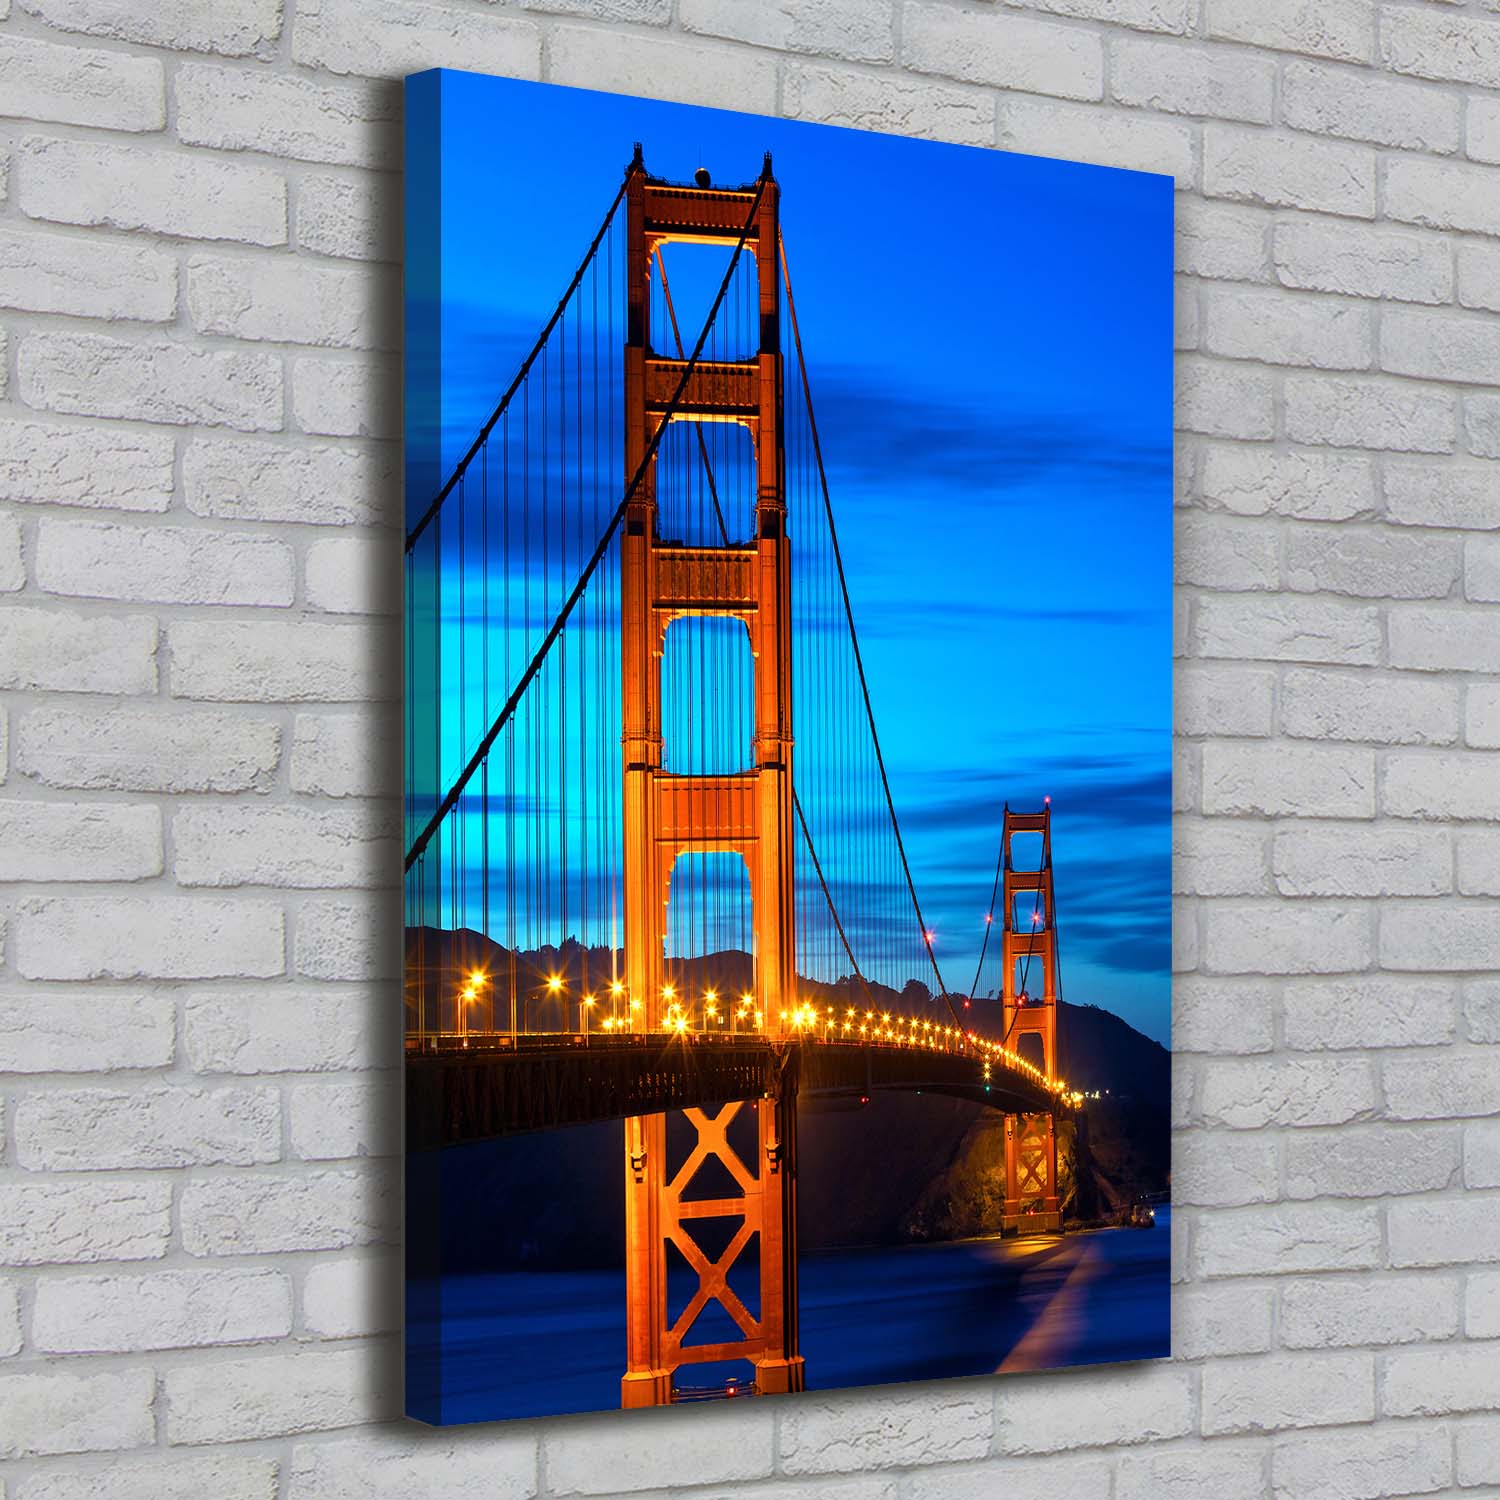 Leinwand-Bild Kunstdruck Hochformat 70x100 Bilder San Francisco Brücke